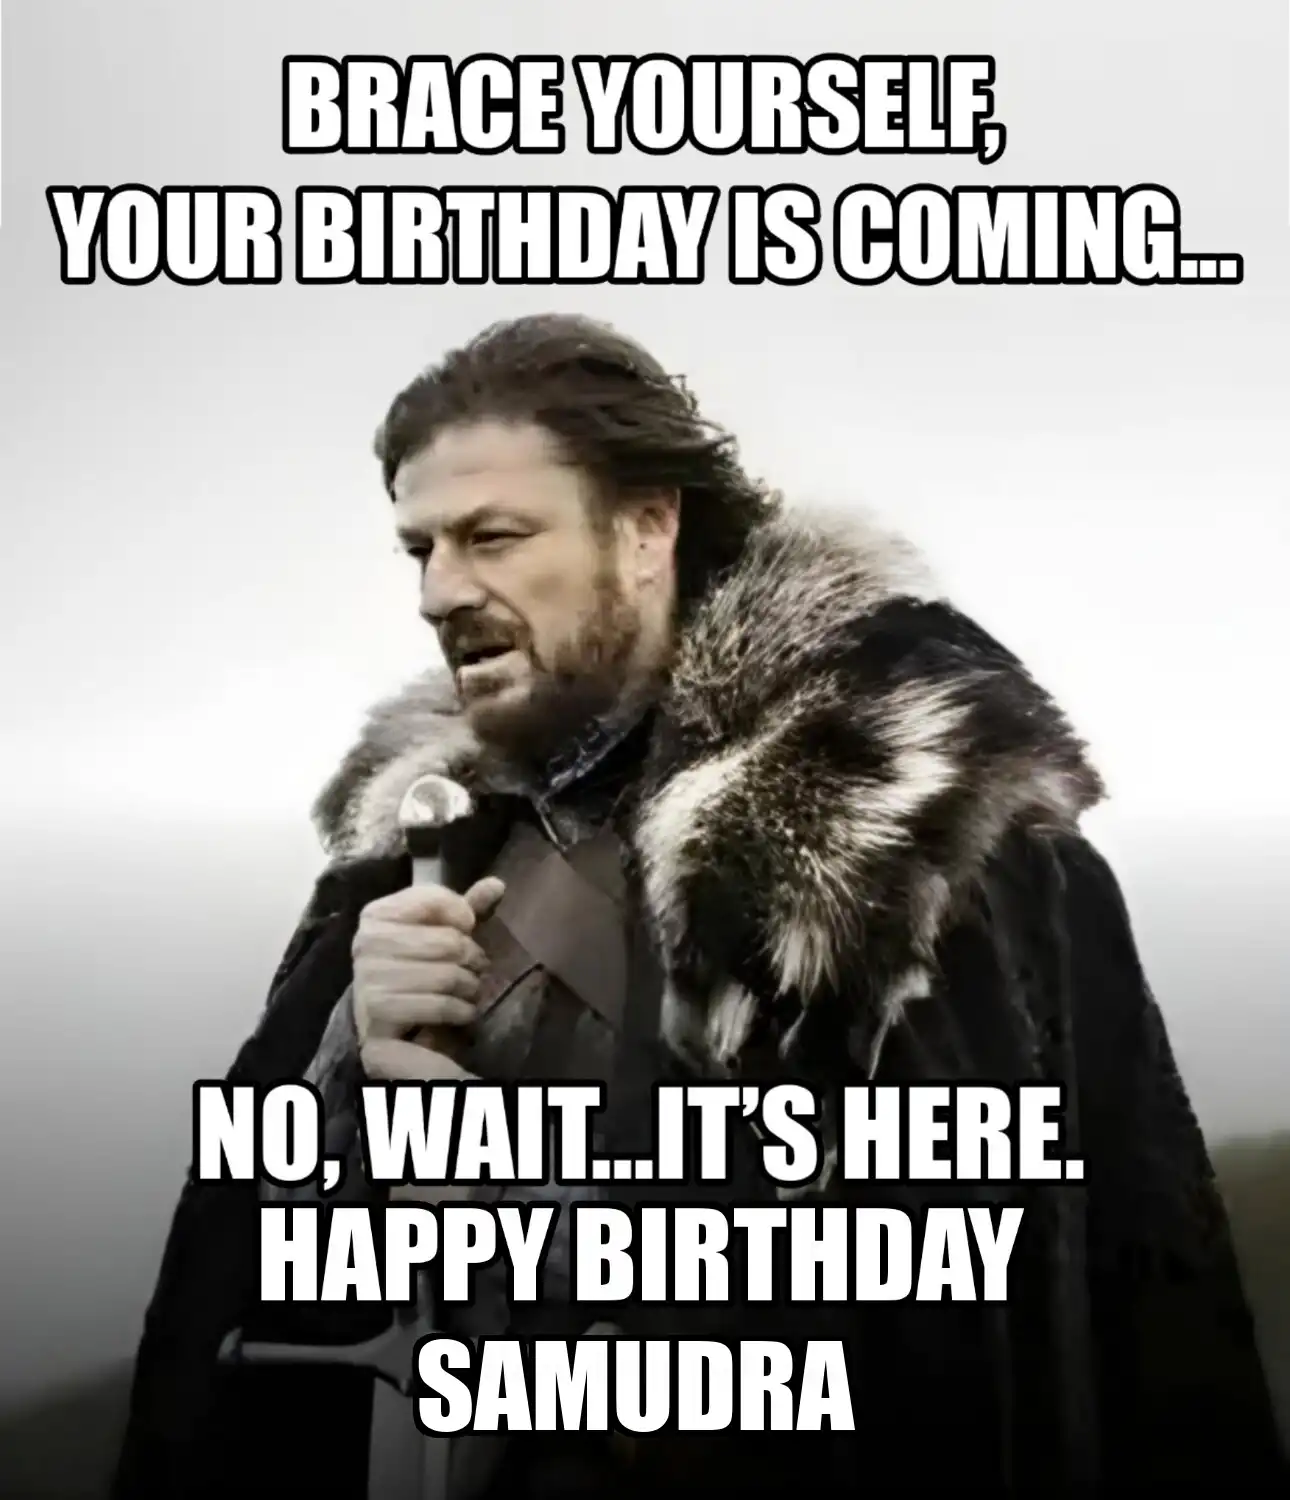 Happy Birthday Samudra Brace Yourself Your Birthday Is Coming Meme